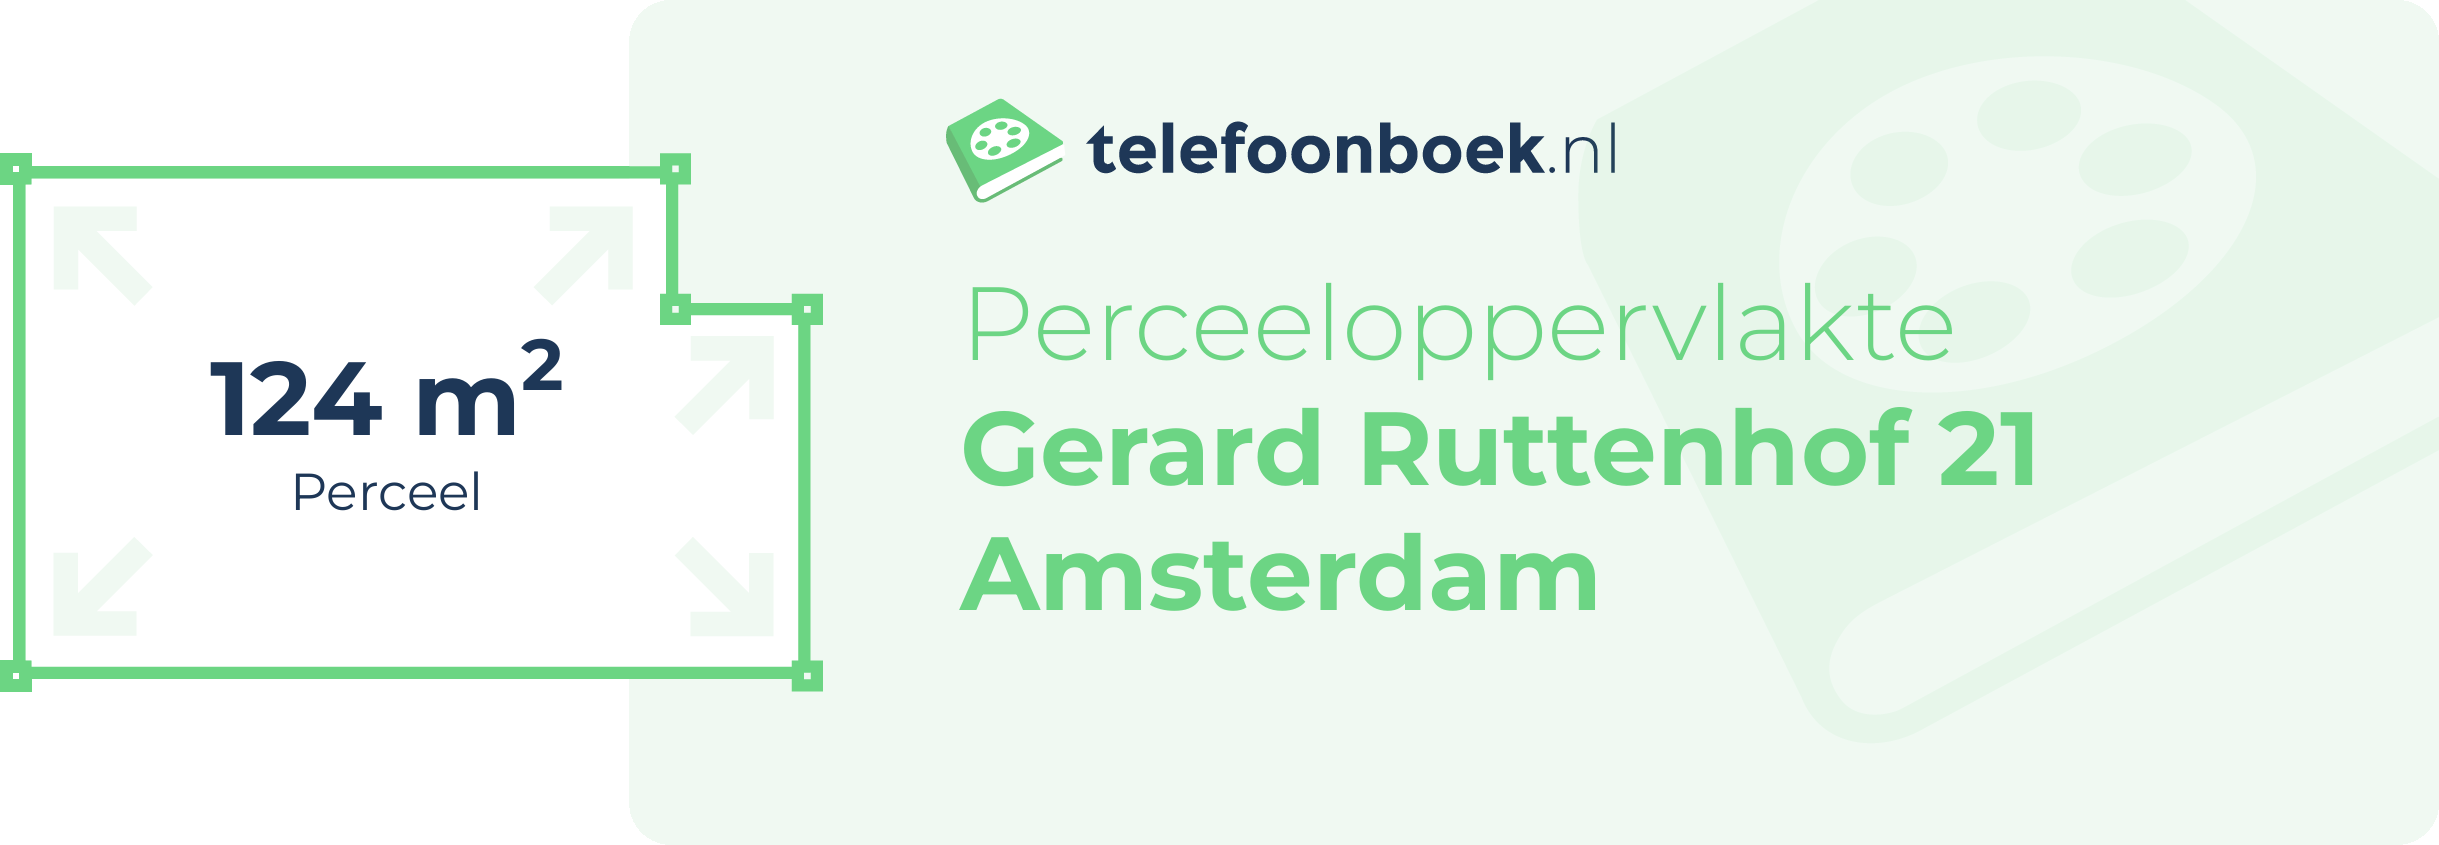 Perceeloppervlakte Gerard Ruttenhof 21 Amsterdam